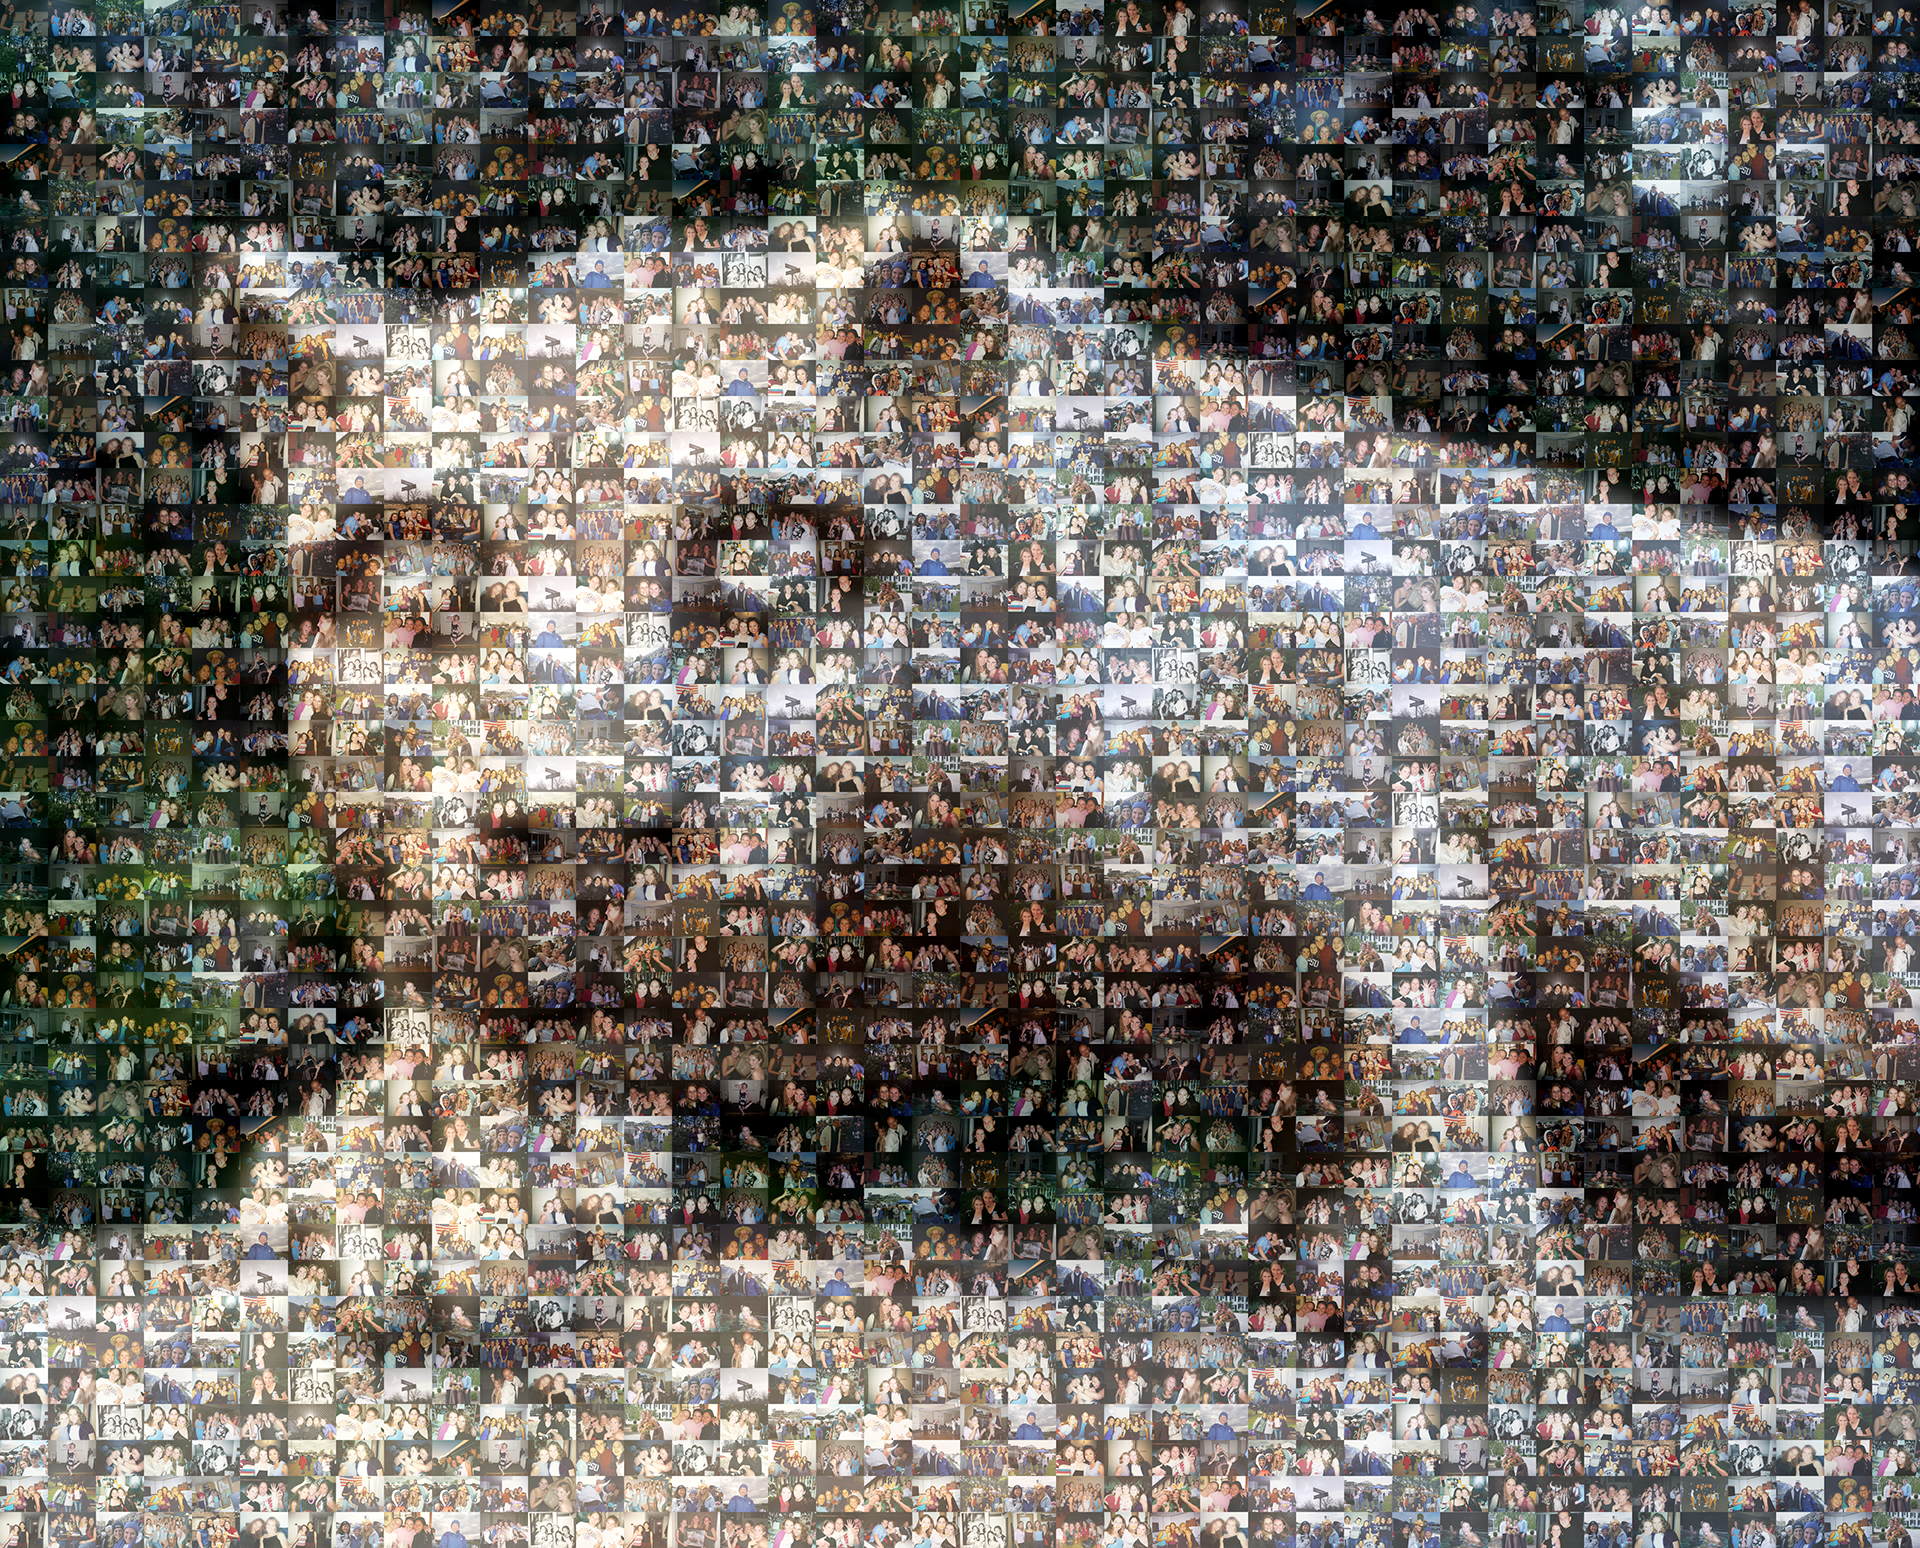 photo mosaic created using 92 college life photos